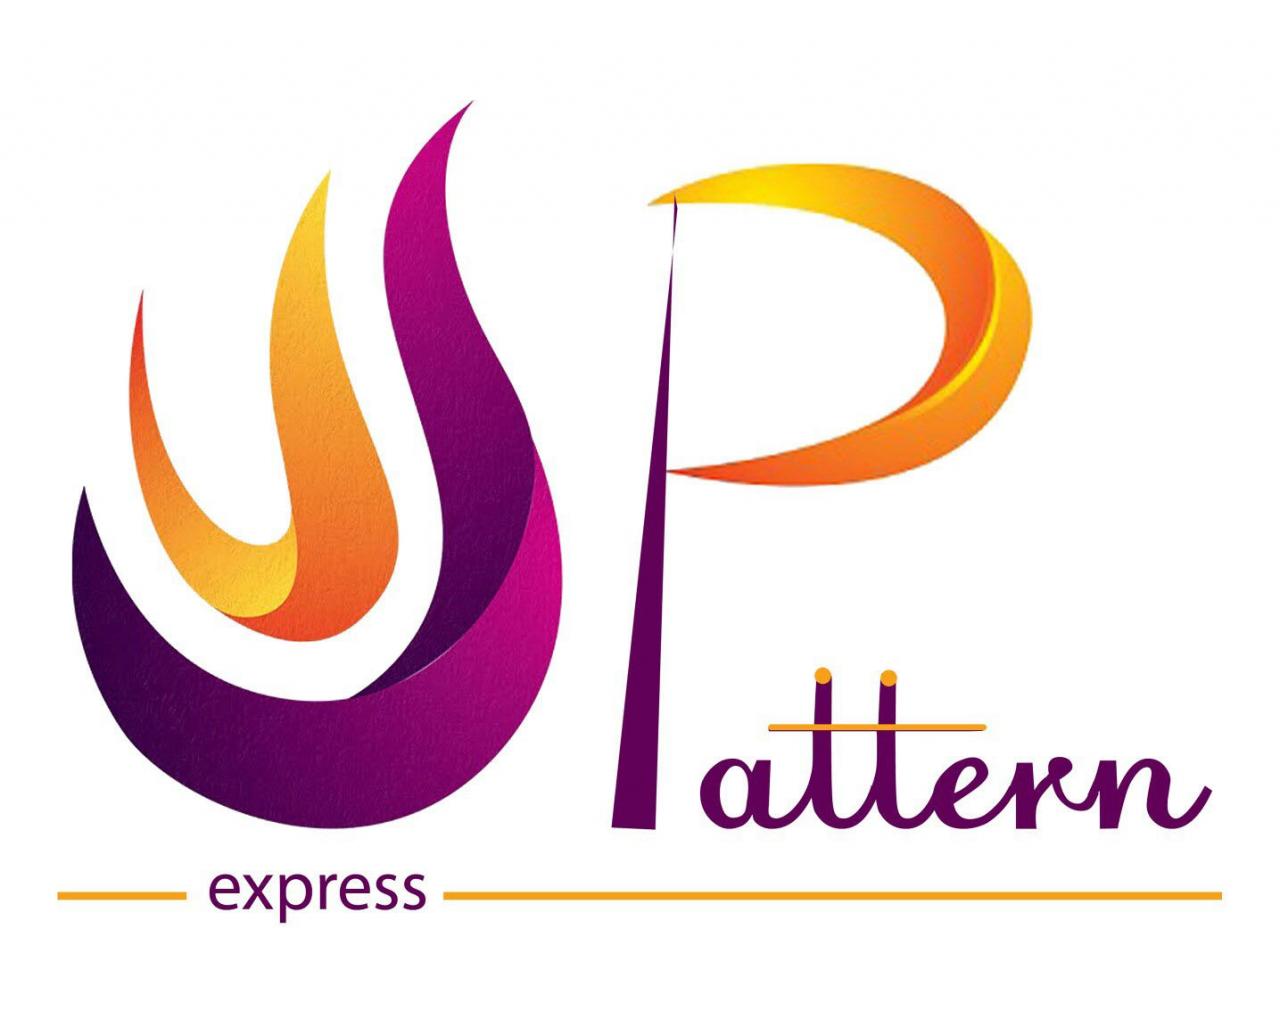 Pattern-Express